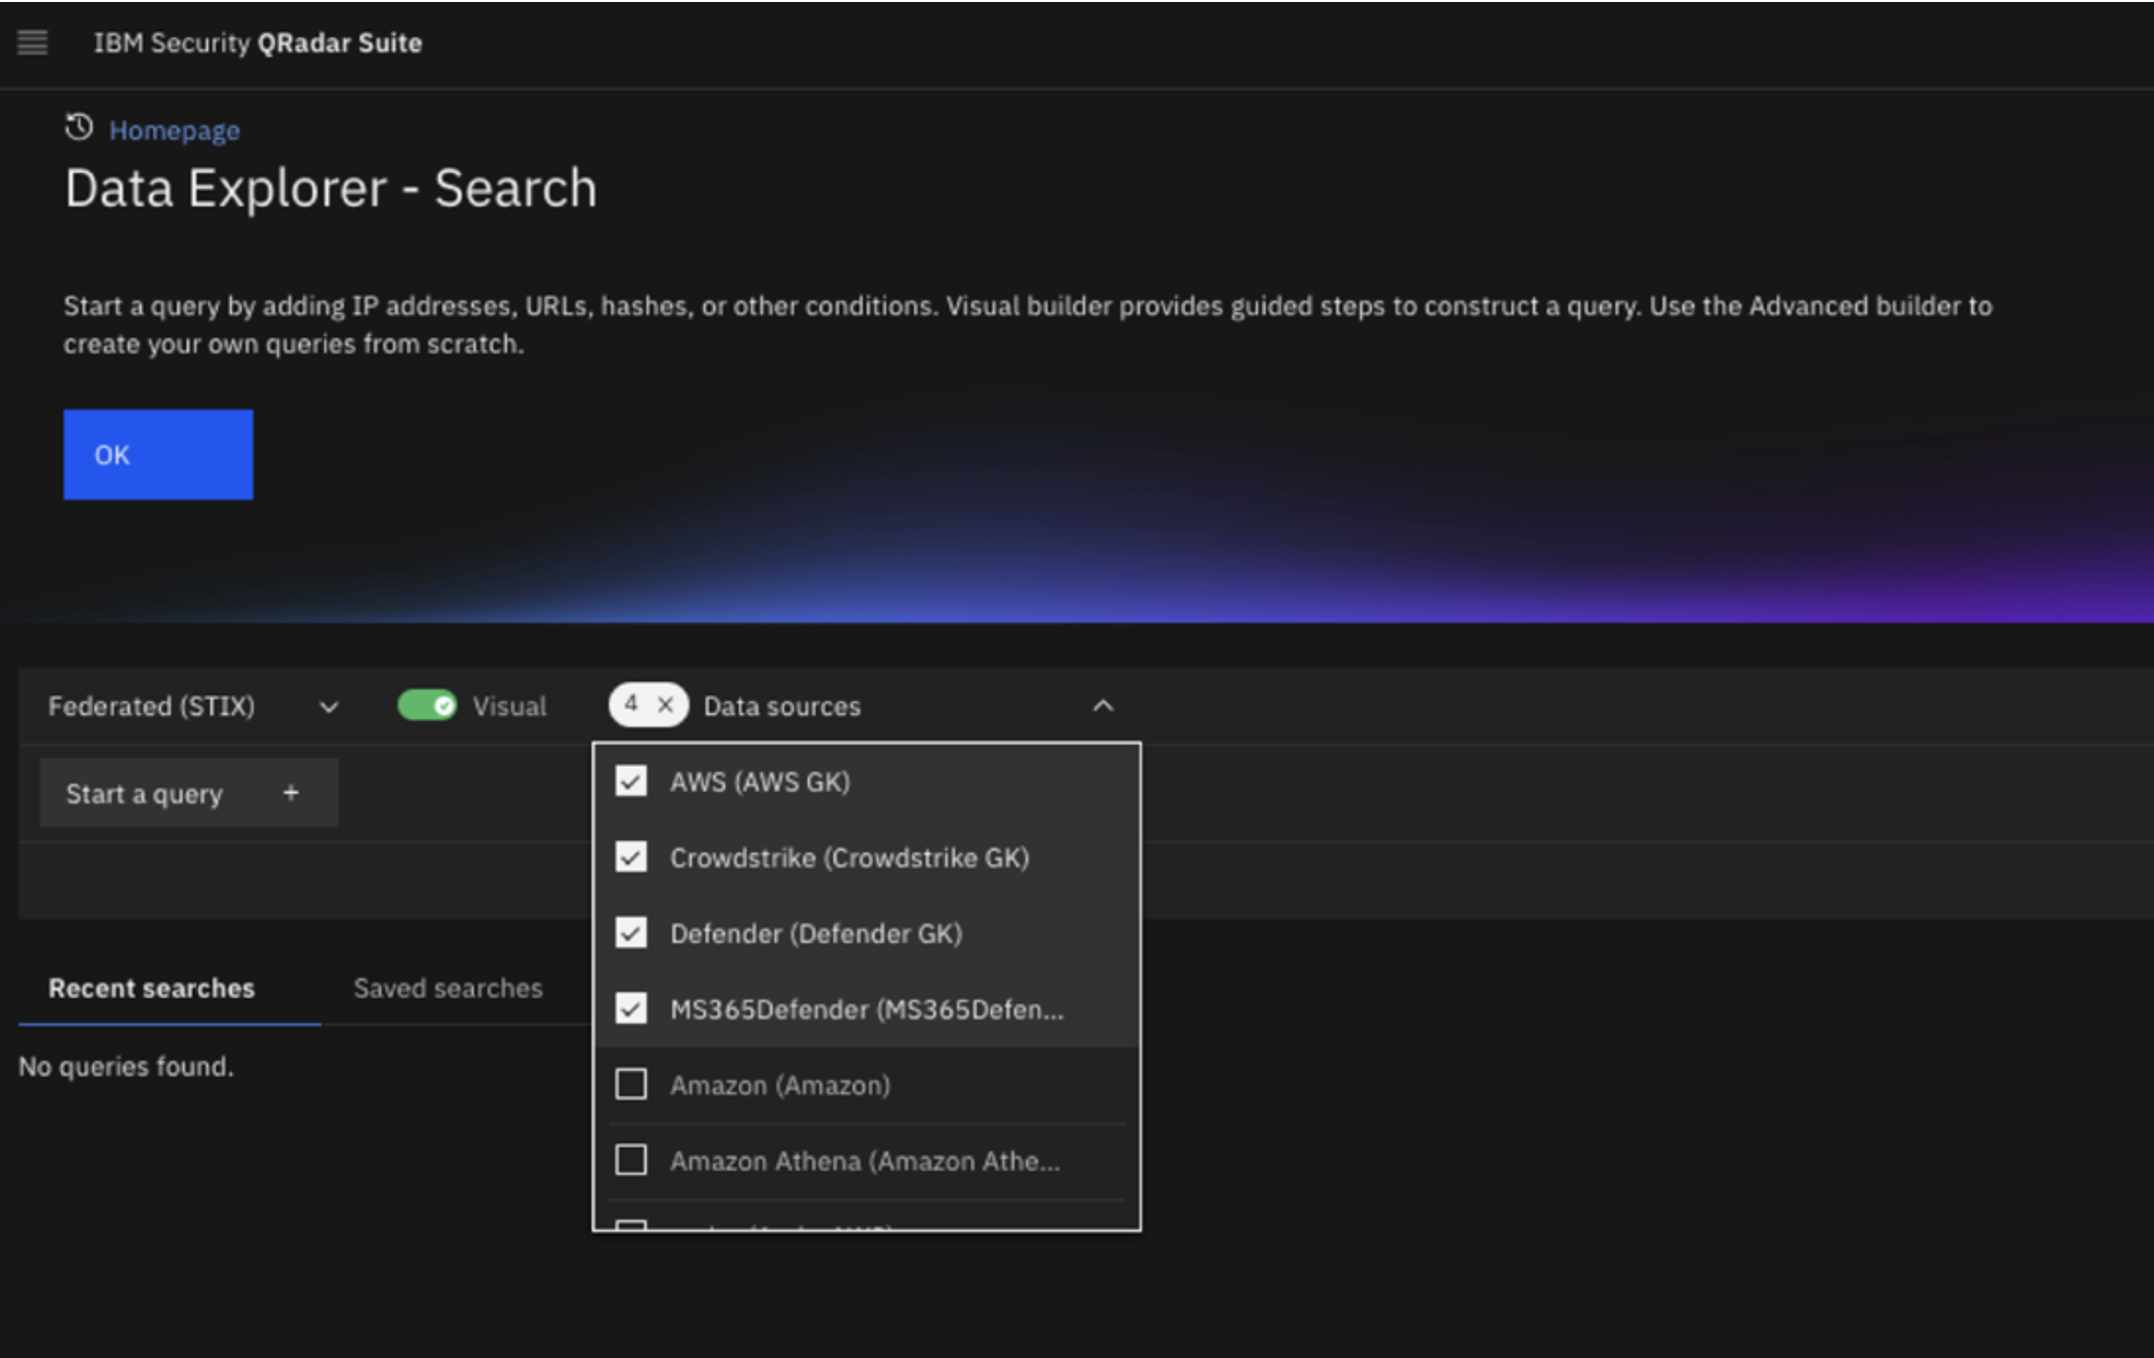 Screenshot of IBM Security QRadar Suite's Data Explorer Search functionality